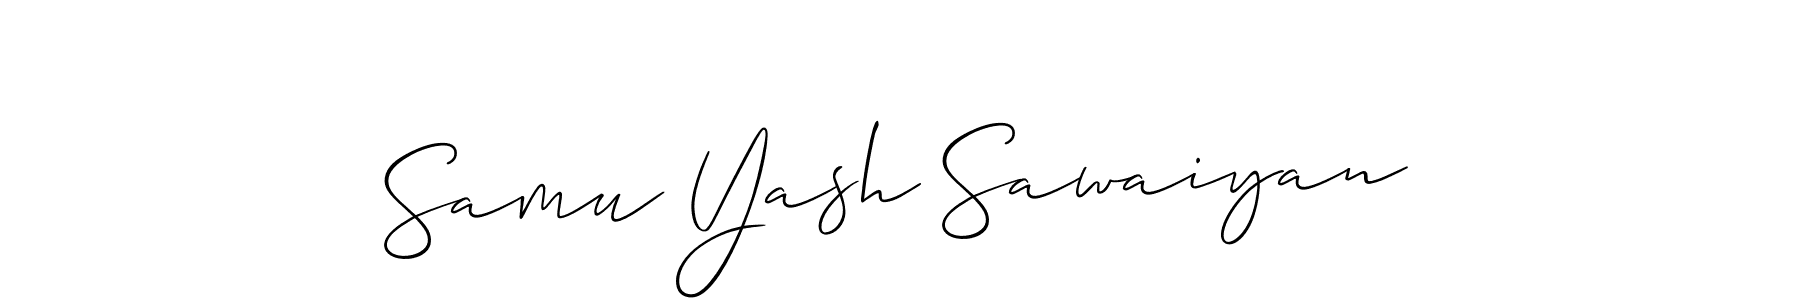 Make a beautiful signature design for name Samu Yash Sawaiyan. Use this online signature maker to create a handwritten signature for free. Samu Yash Sawaiyan signature style 2 images and pictures png